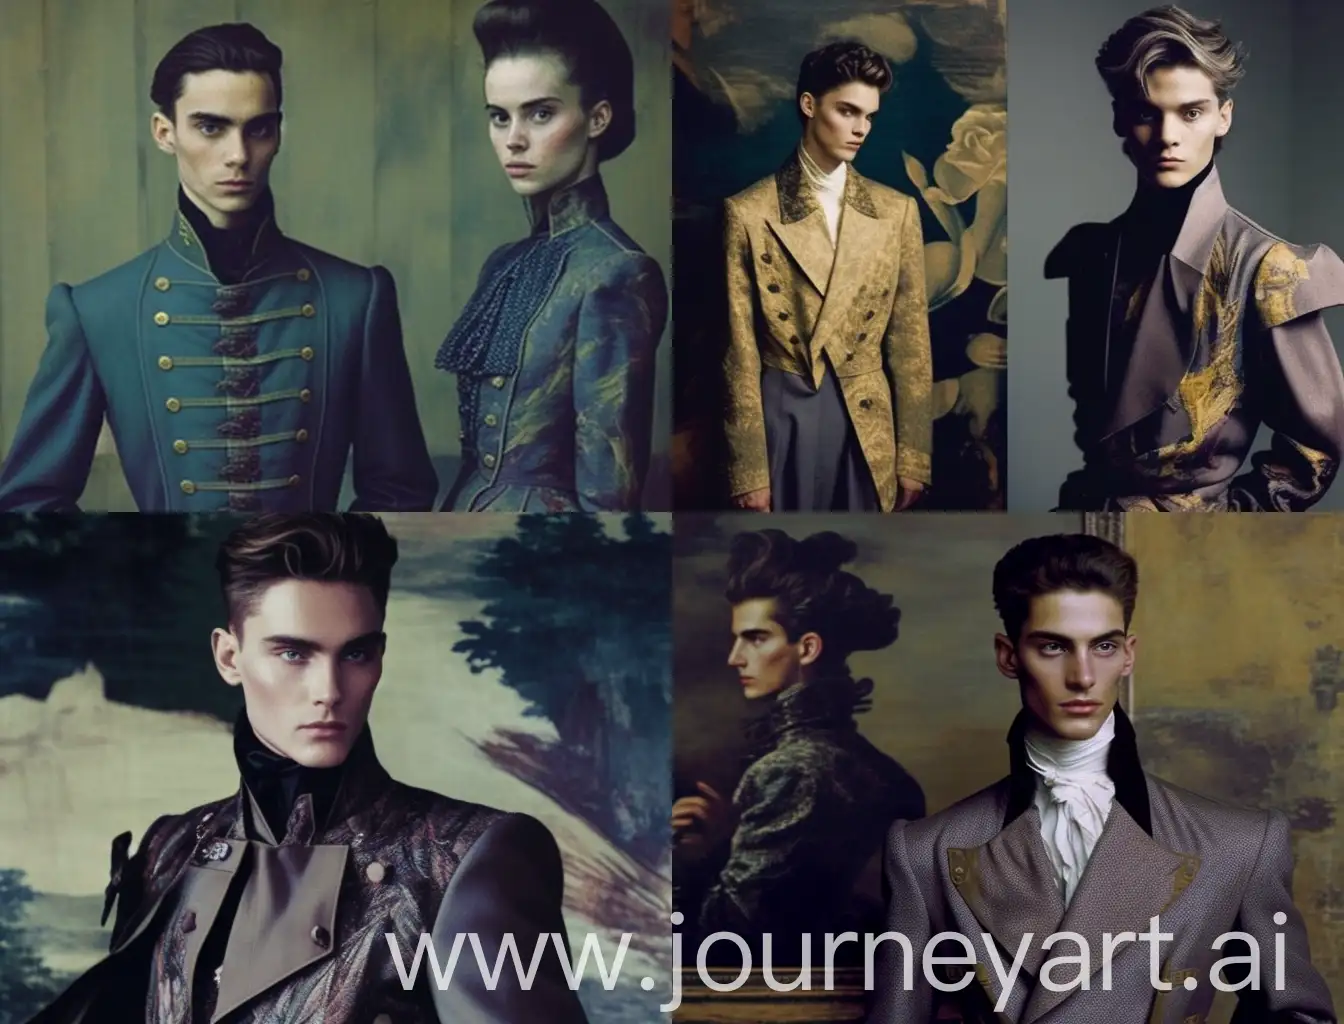 Futuristic-Mens-Fashion-1990s-VogueInspired-Army-Renaissance-Suit